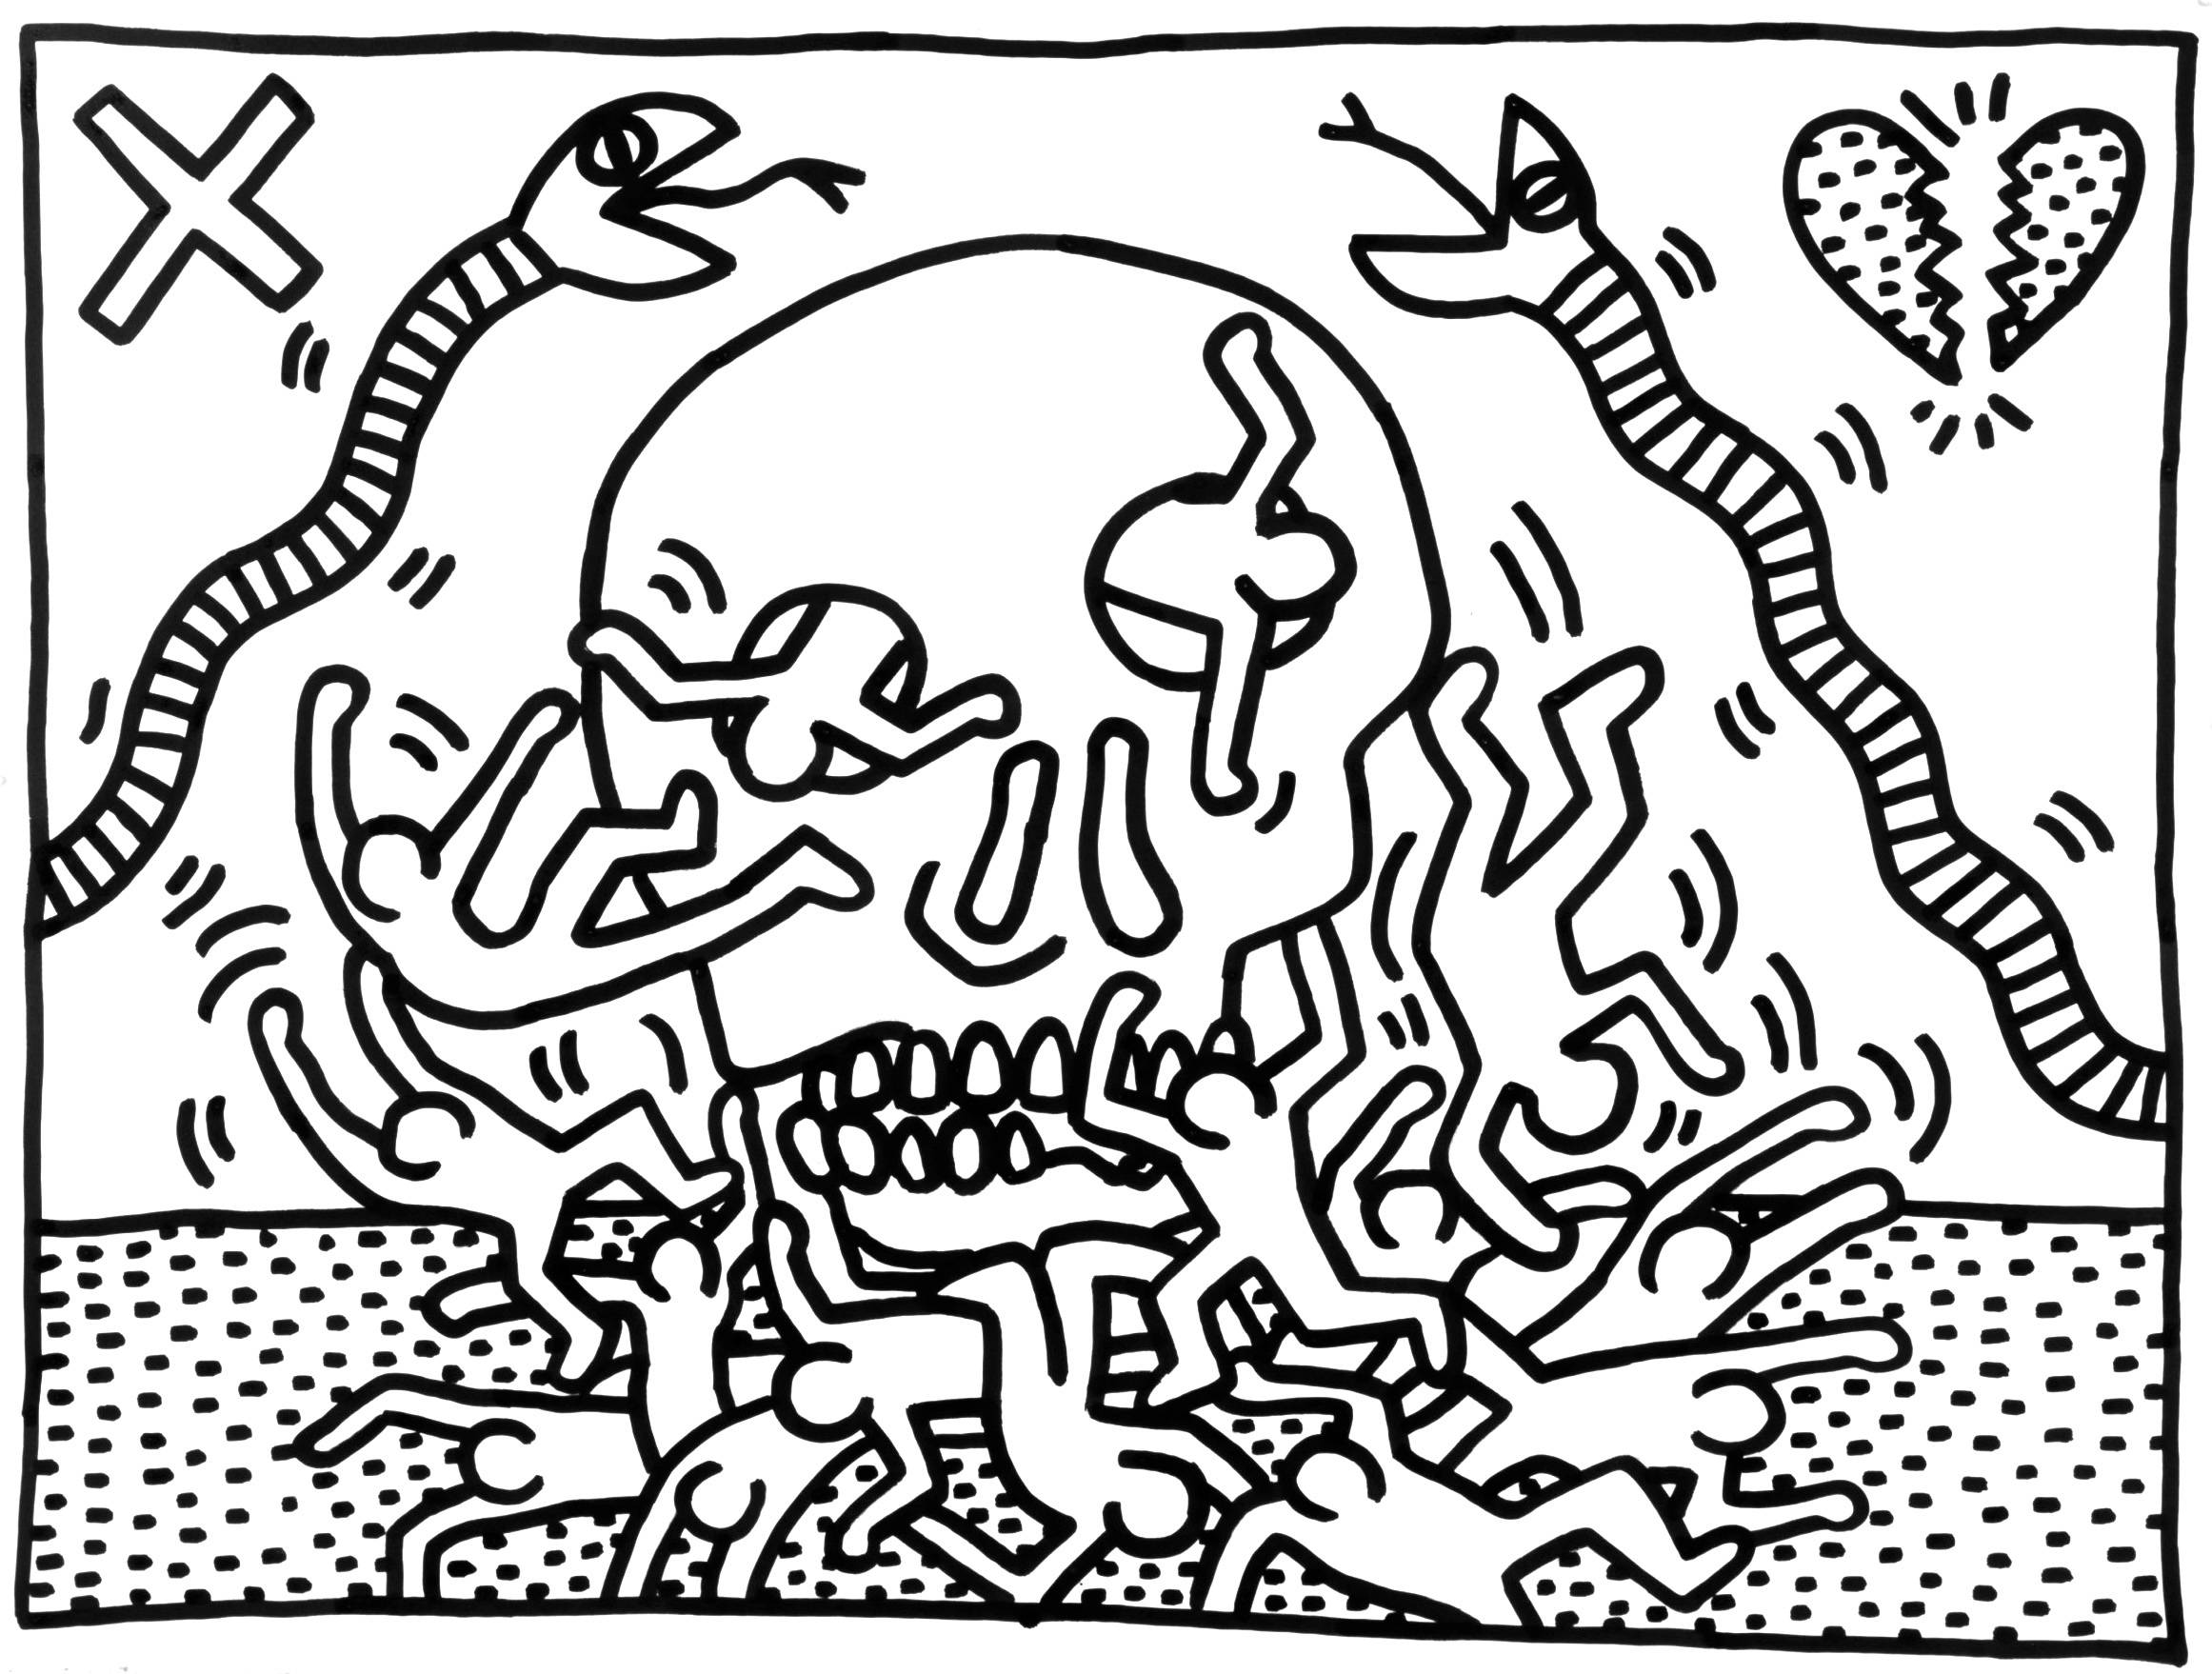 Keith Haring Wallpapers Art